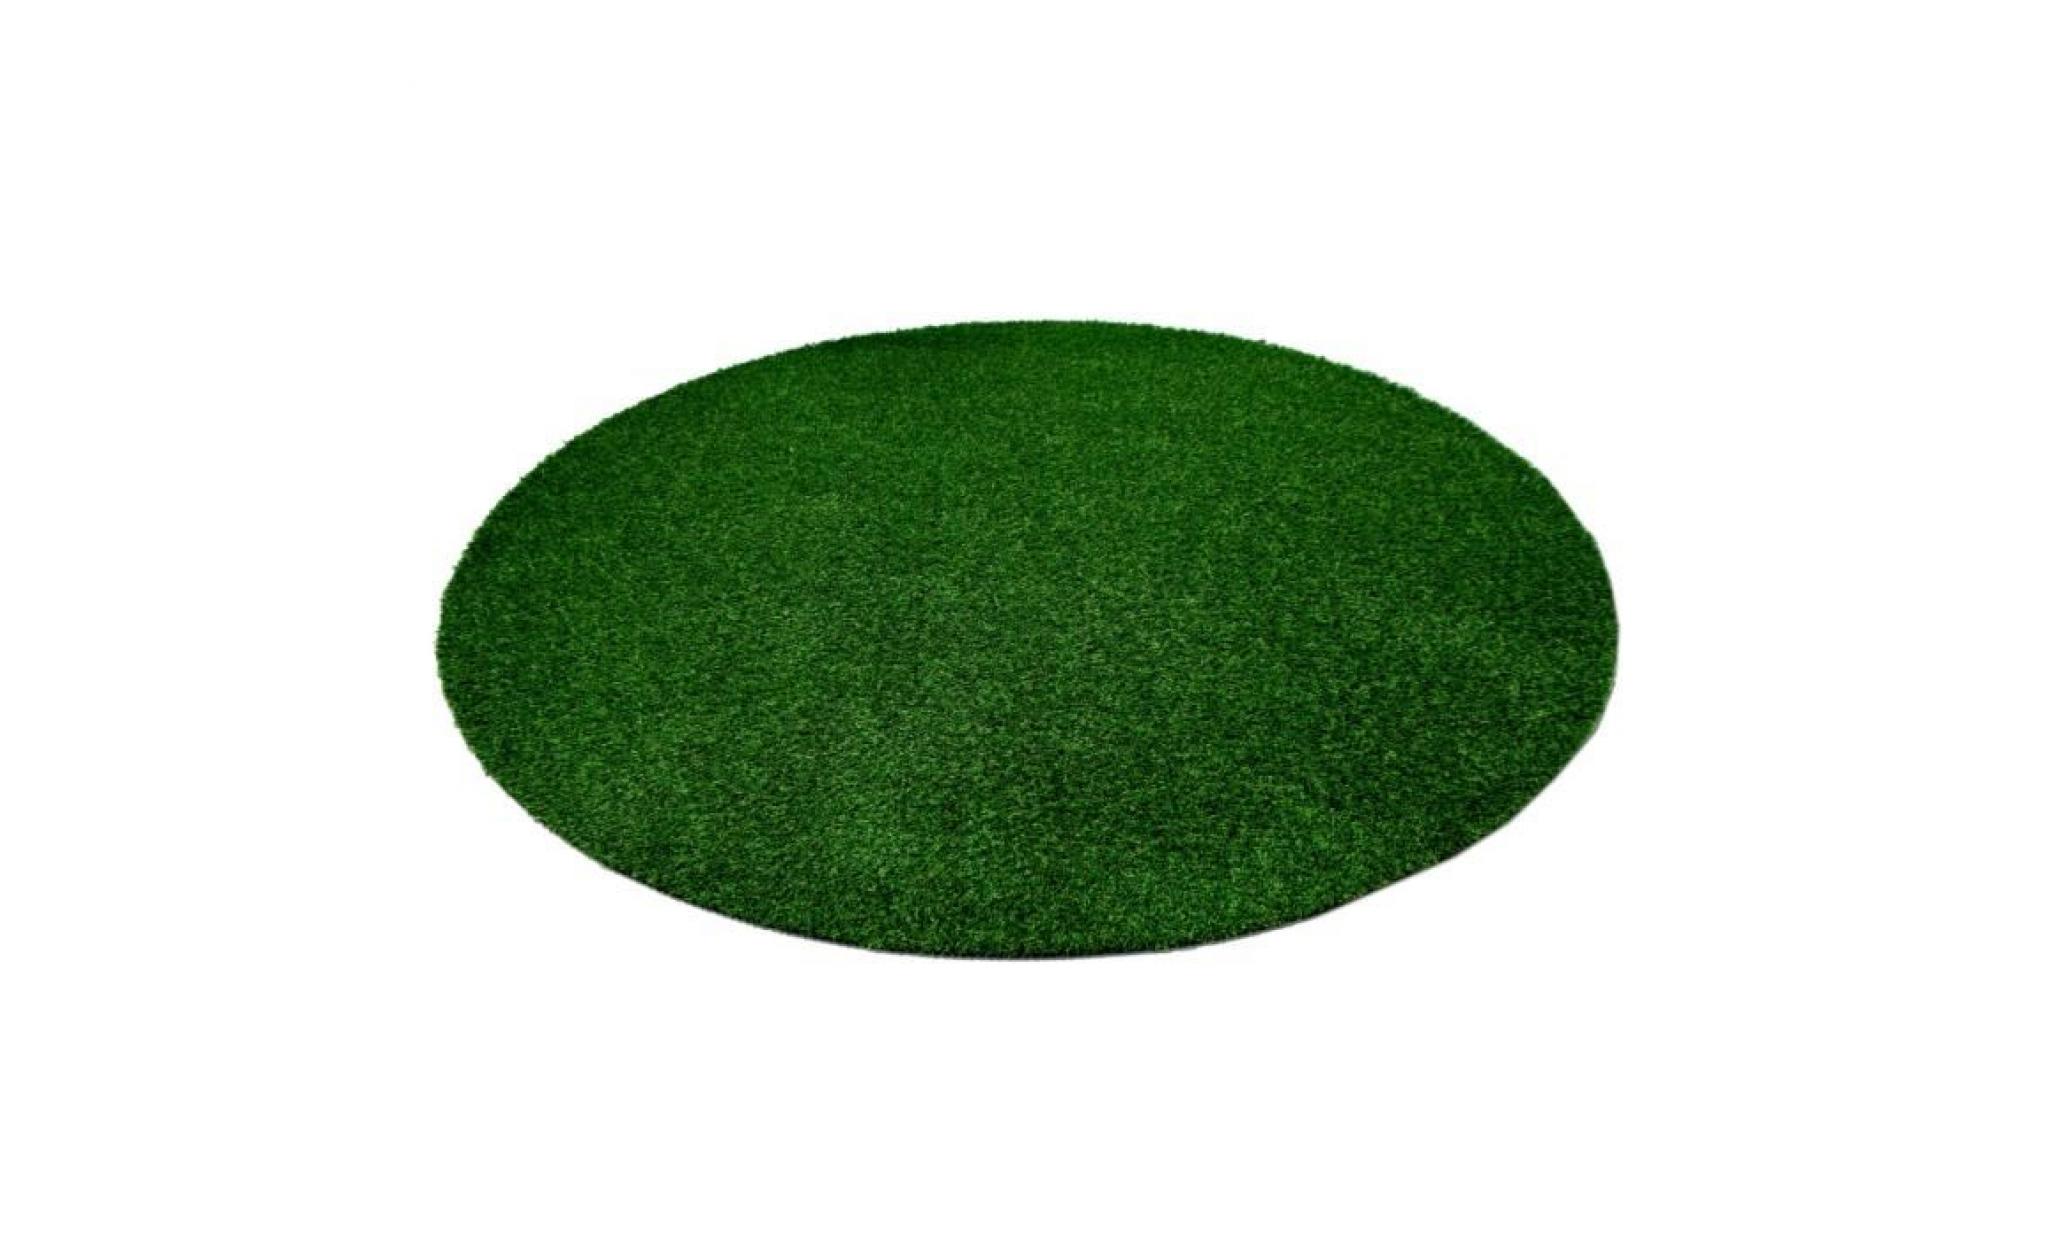 chelsea   tapis type luxe gazon artificiel rond – pour jardin, terrasse, balcon   vert   [200 cm rond]